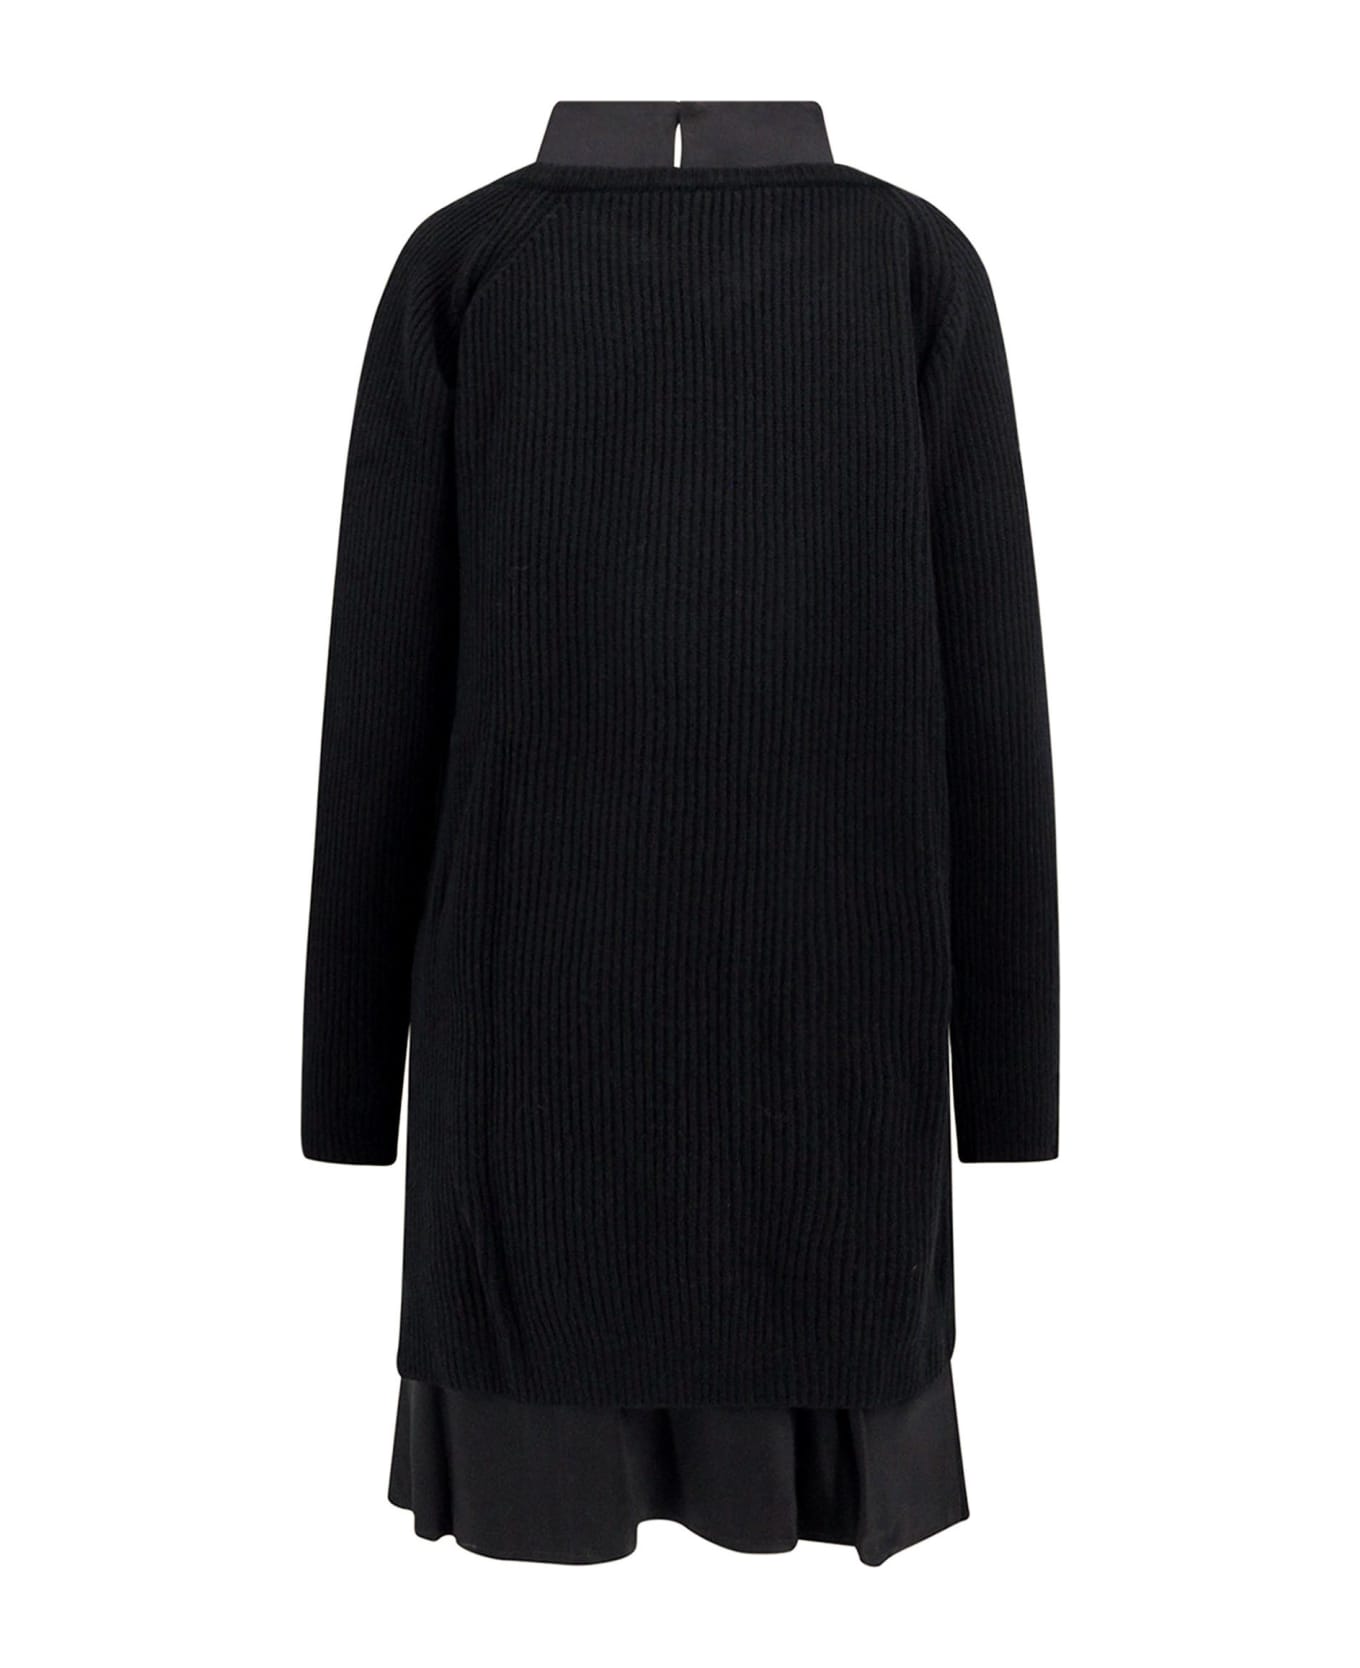 SEMICOUTURE Black Wool Blend Dress - Black